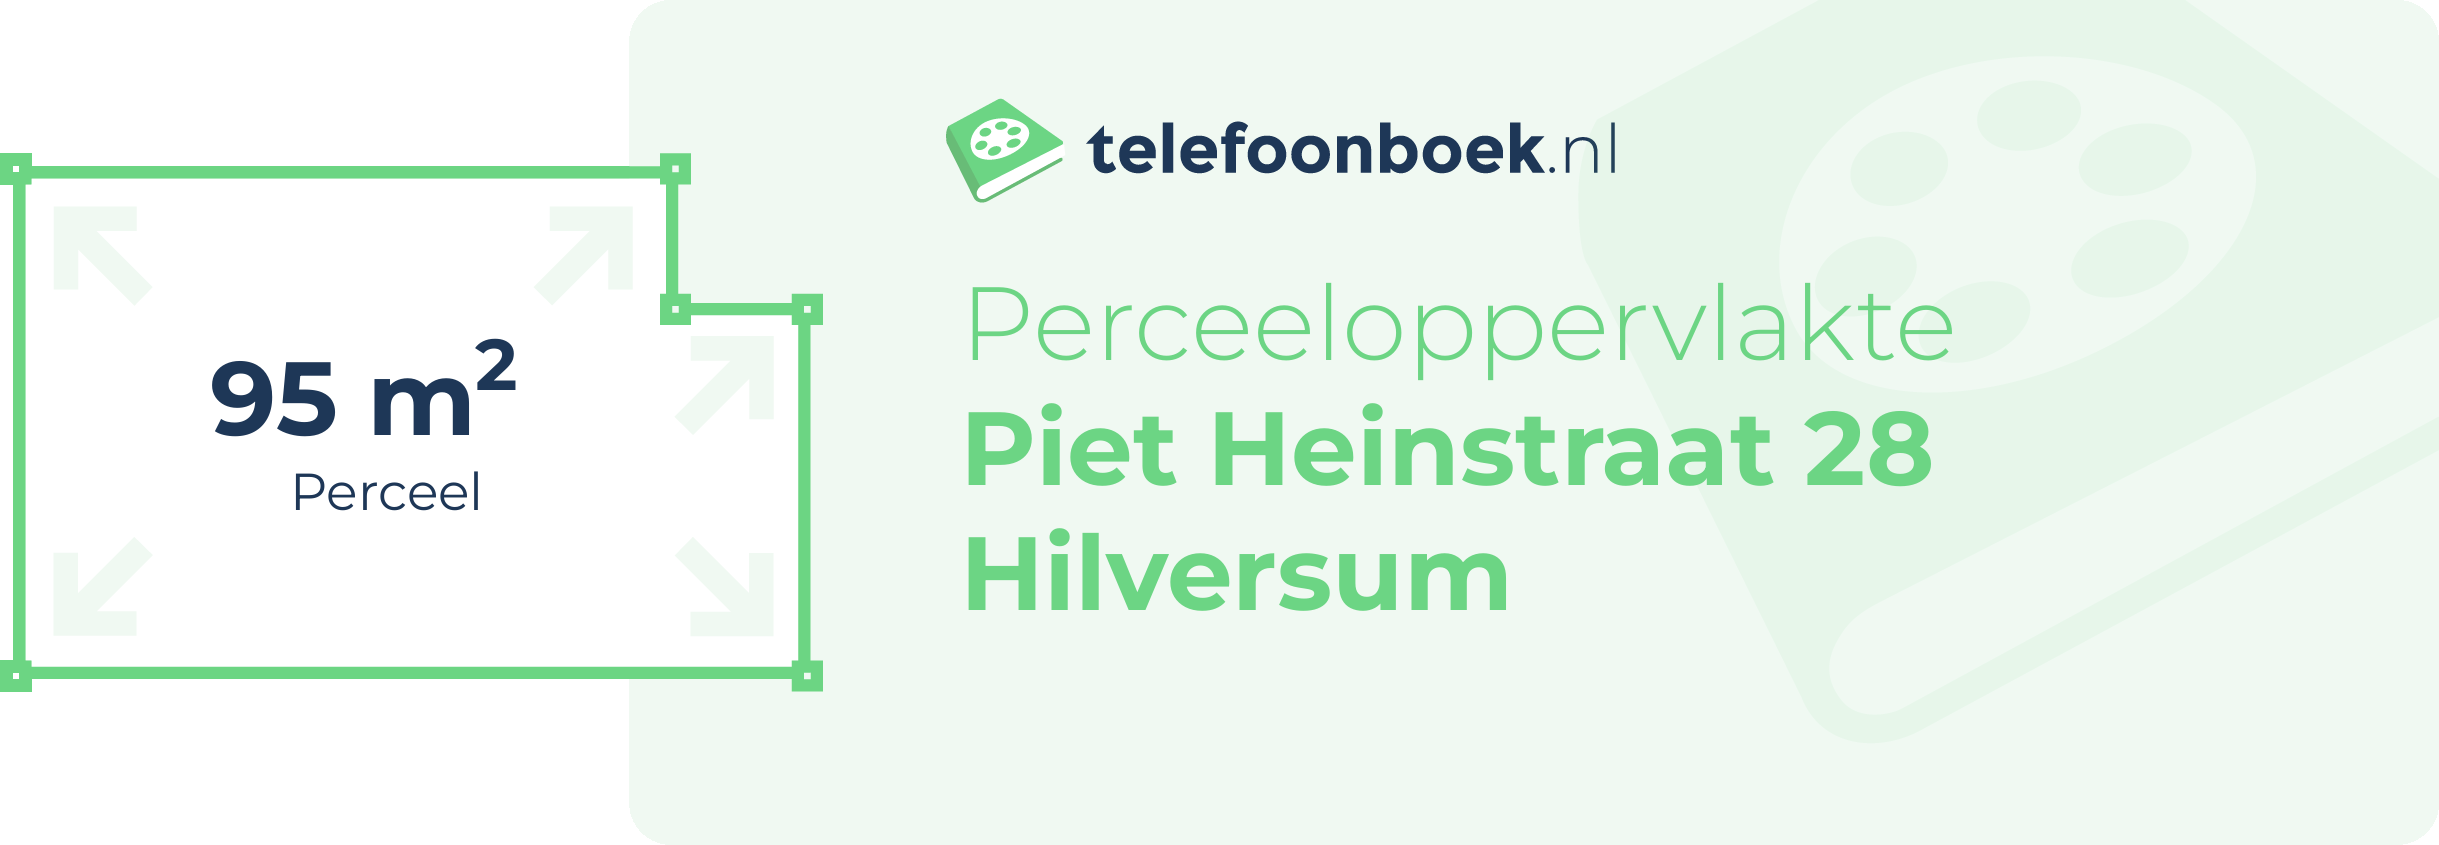 Perceeloppervlakte Piet Heinstraat 28 Hilversum